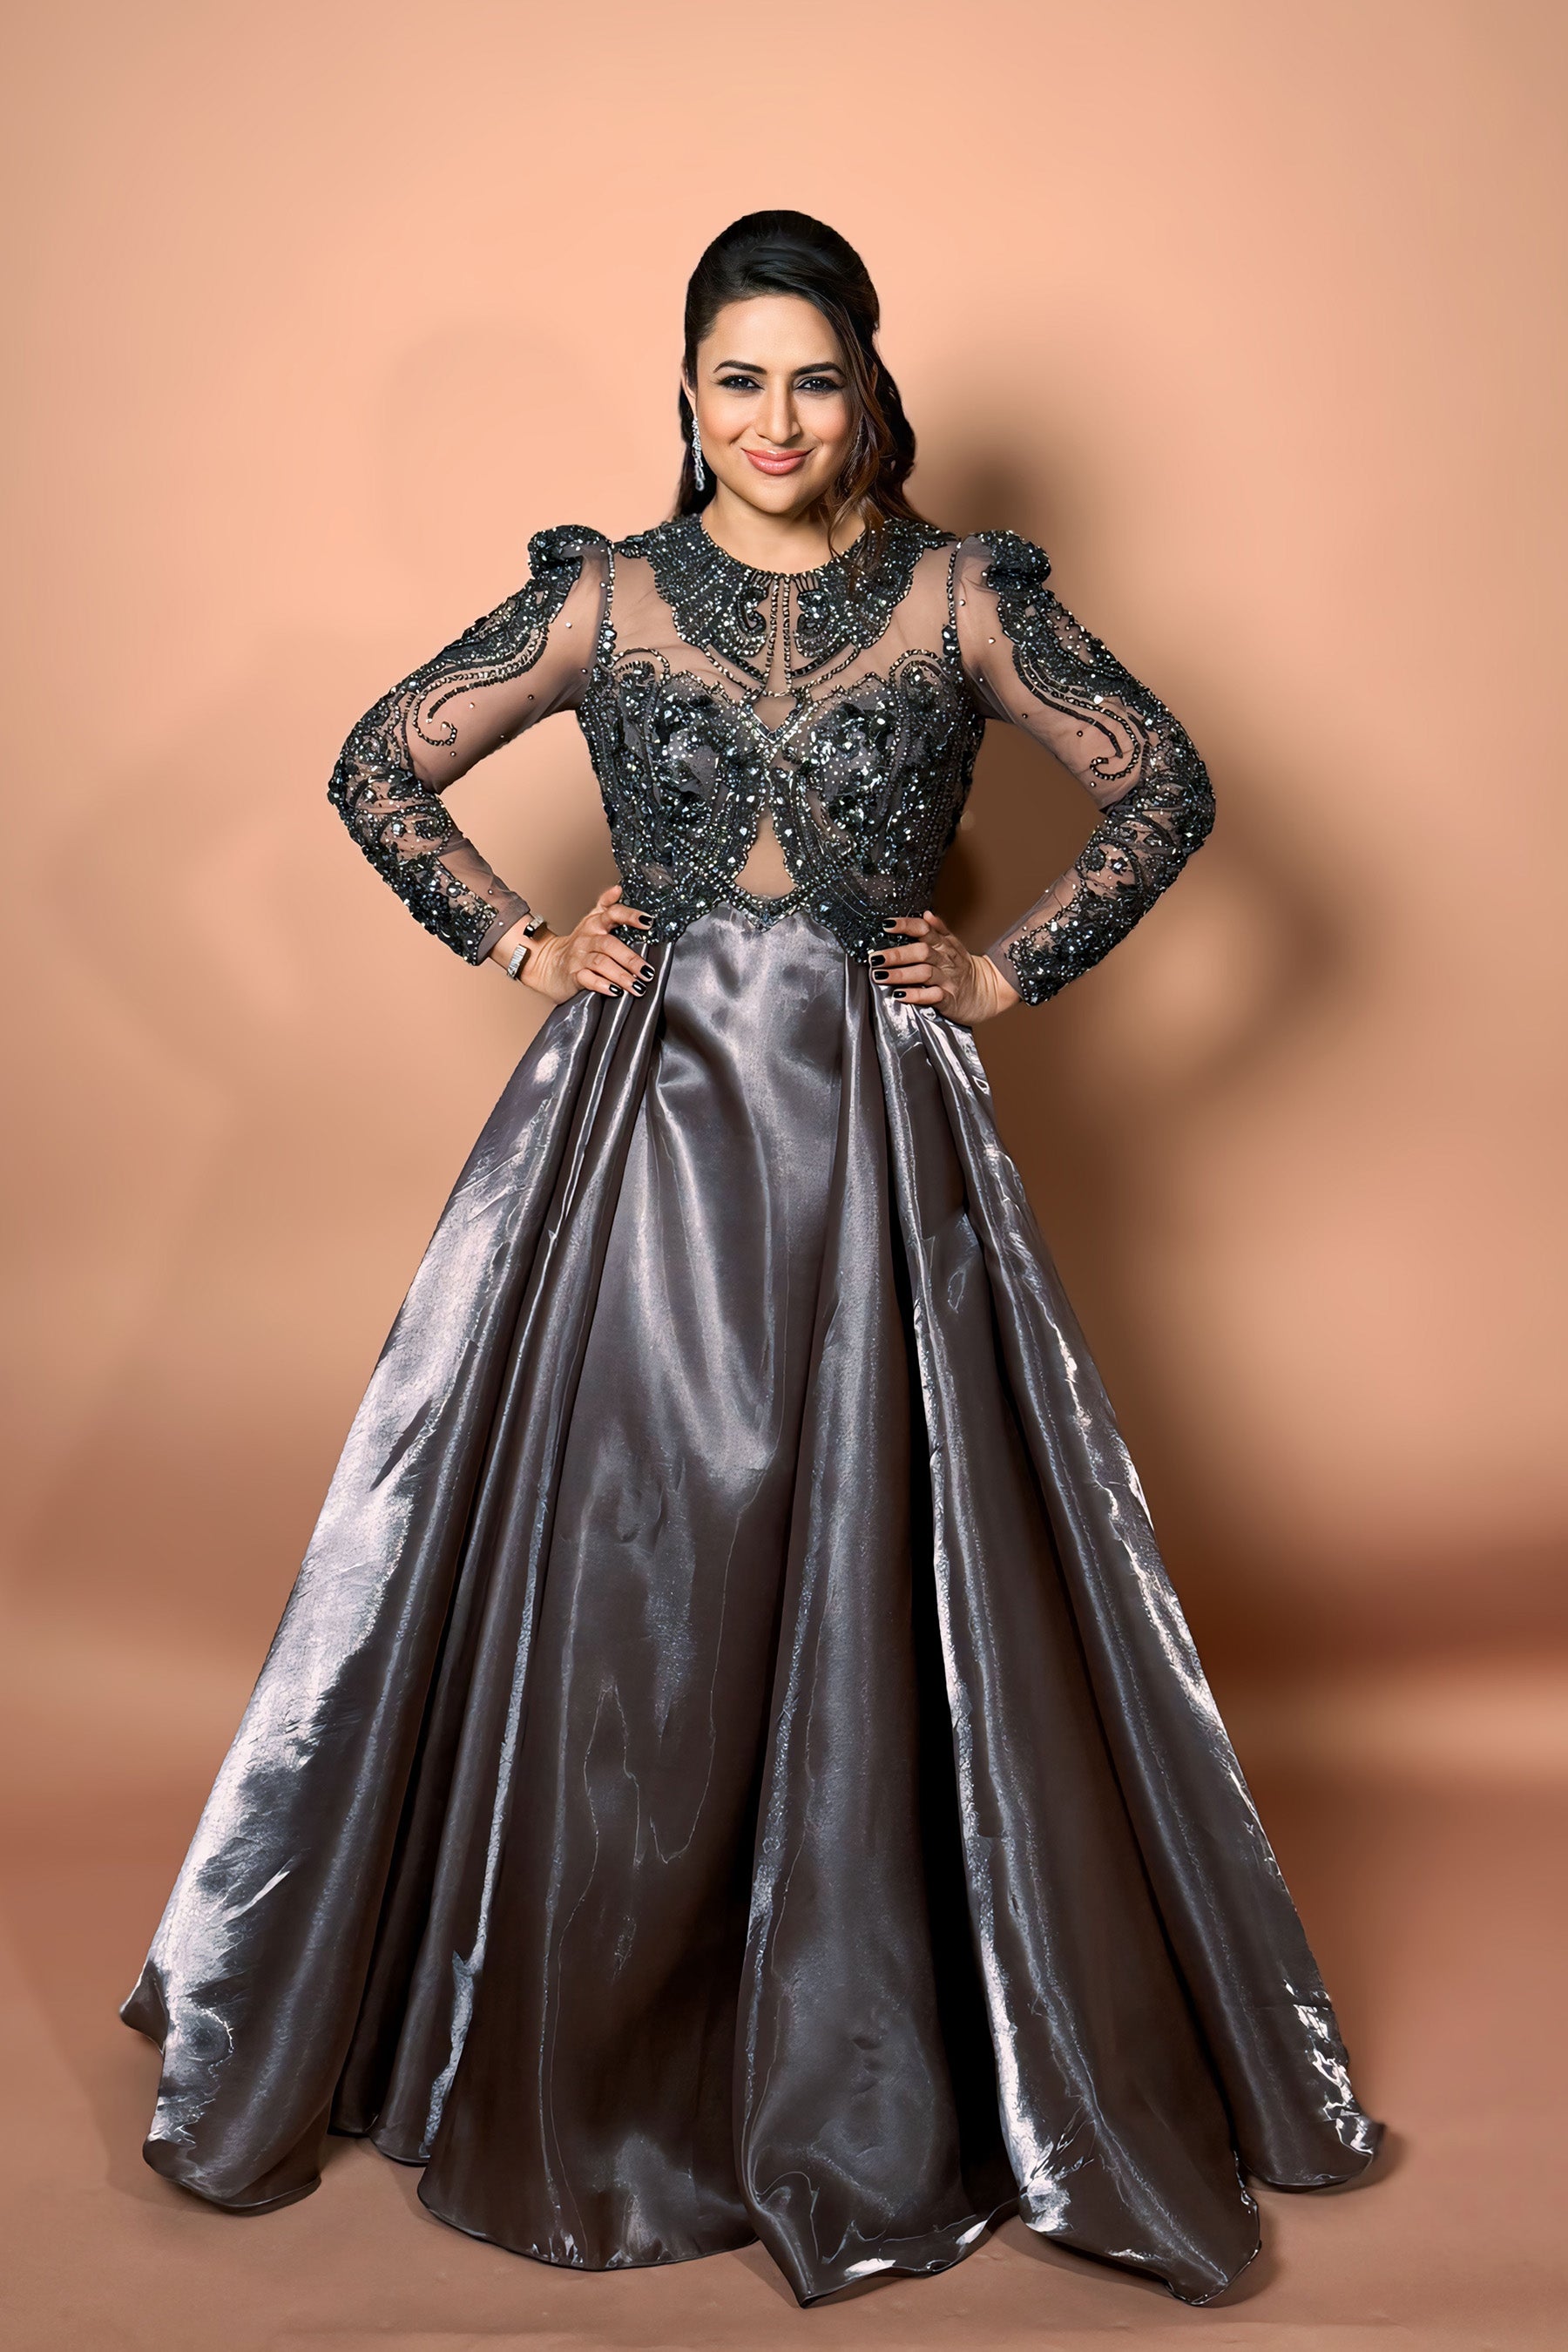 Divyanka Tripathi in The Crystal Cascade Gown